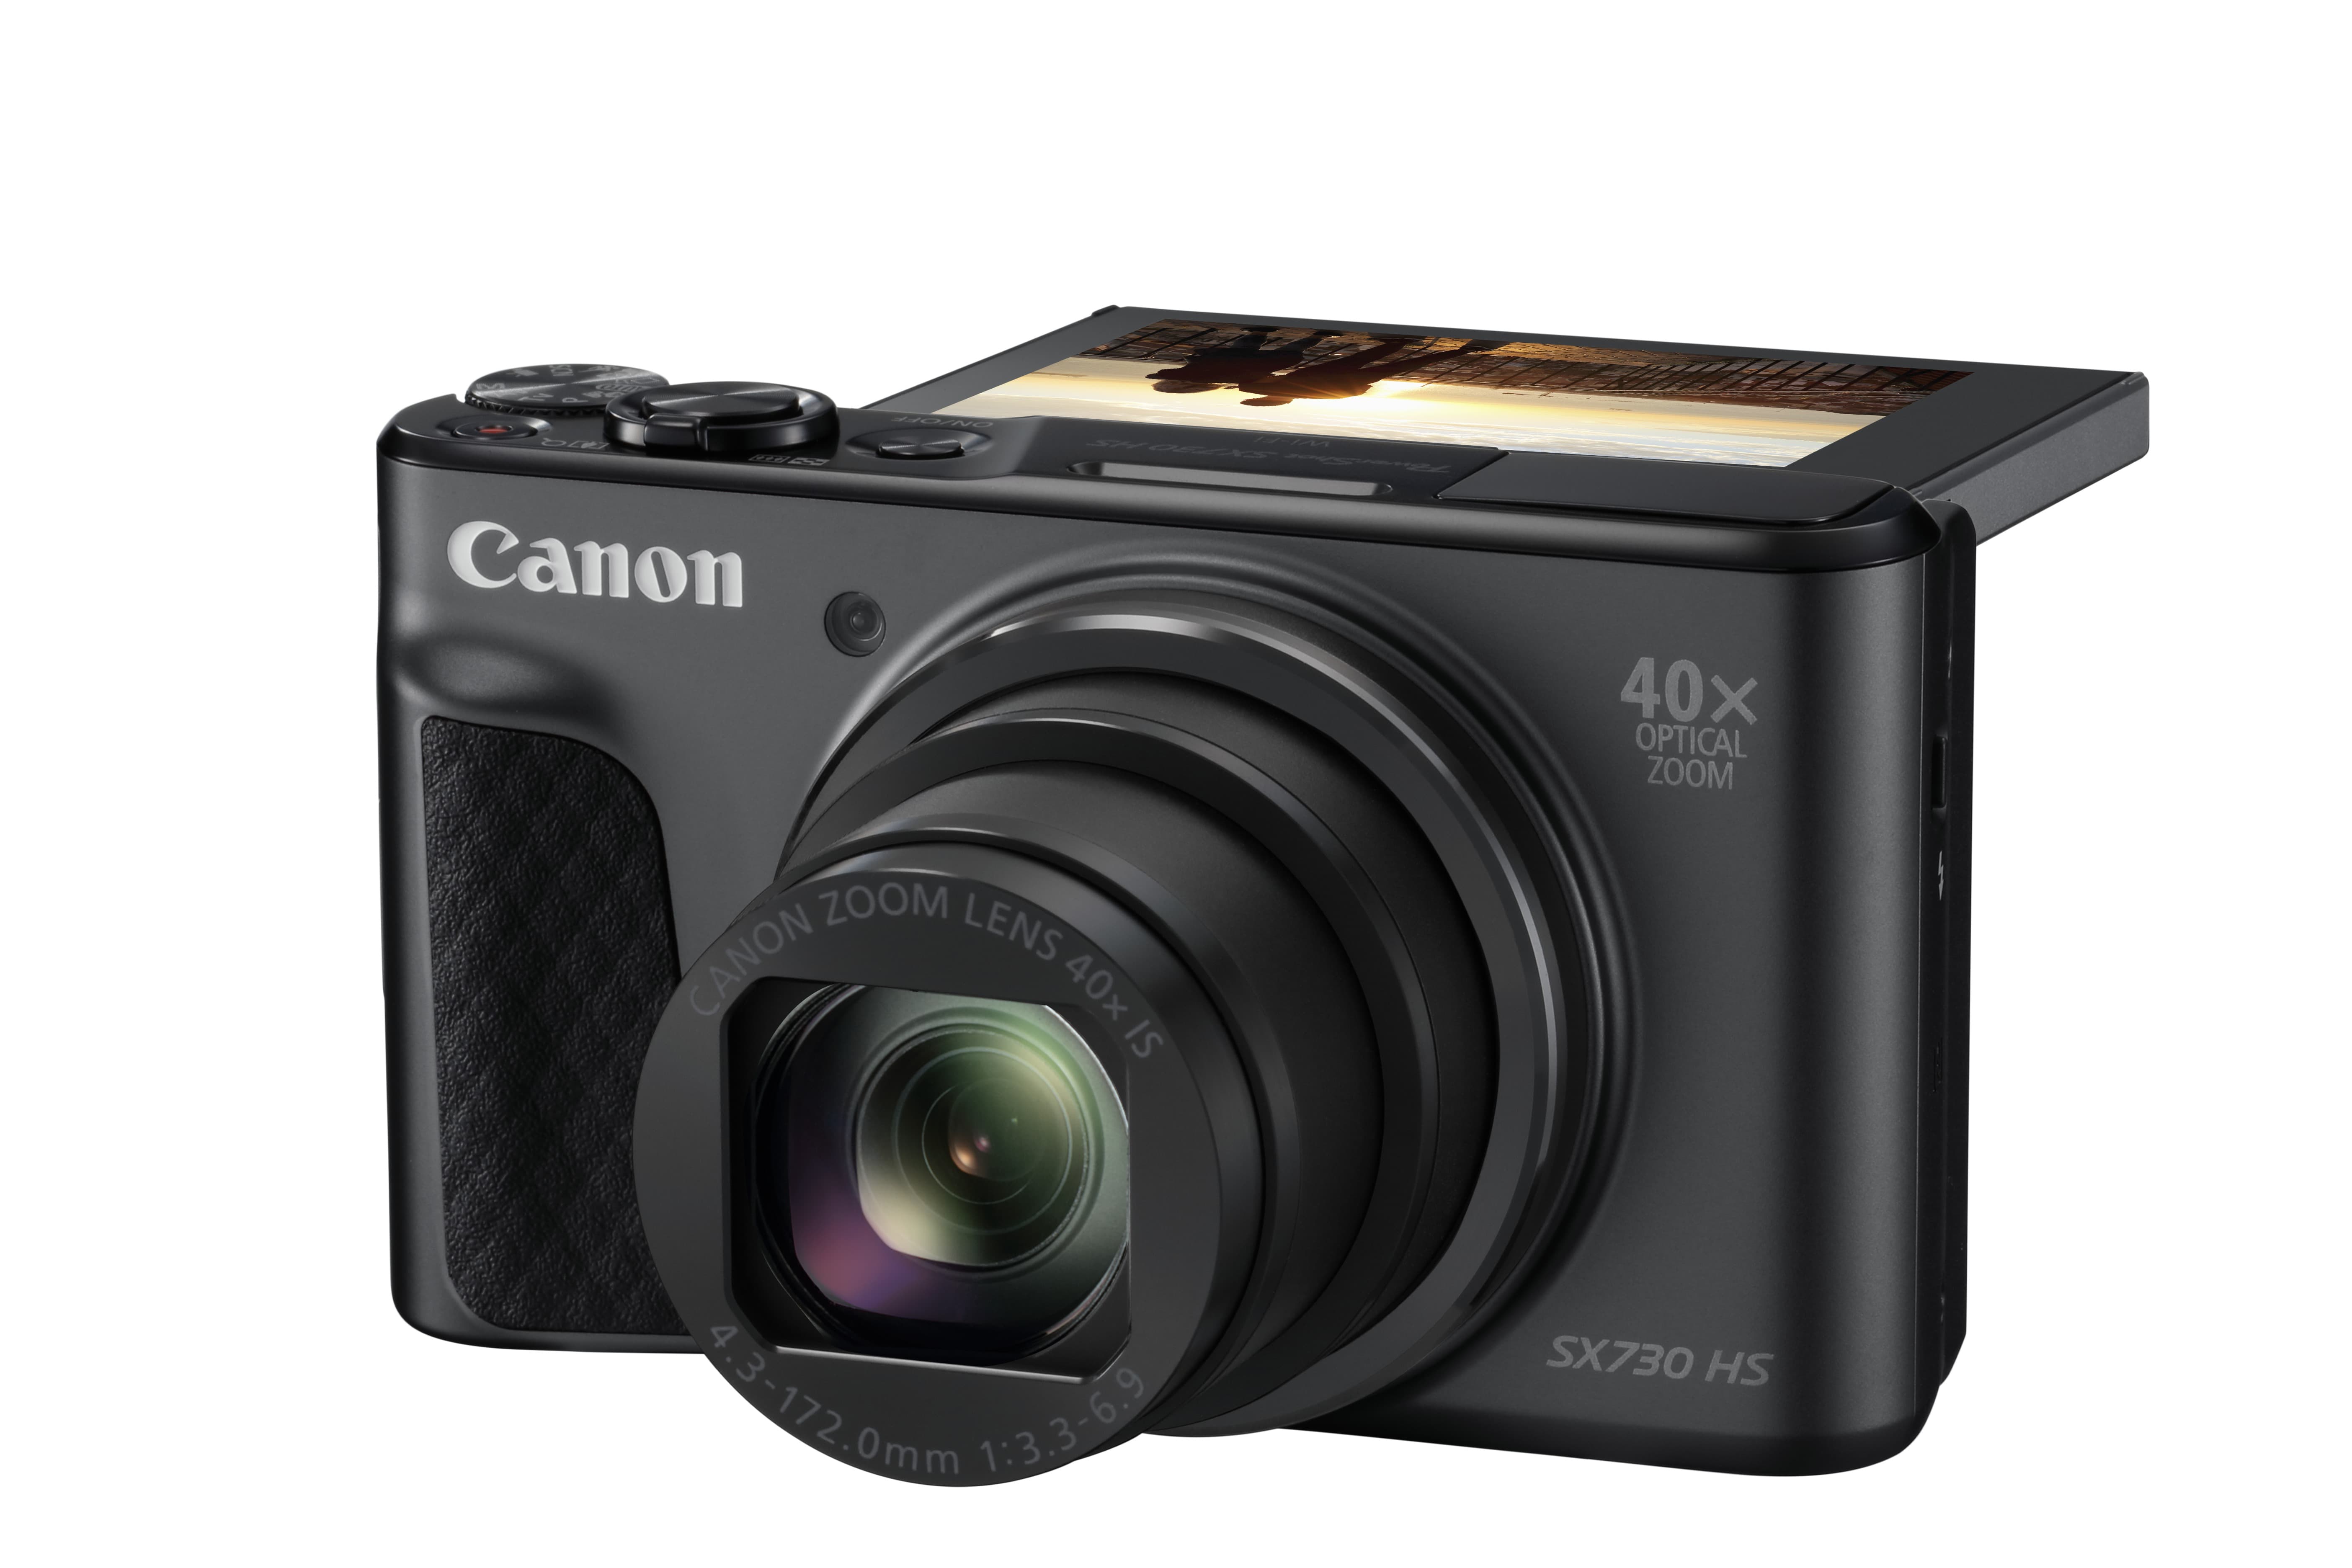 New Canon Powershot superzoom camera - Amateur Photographer